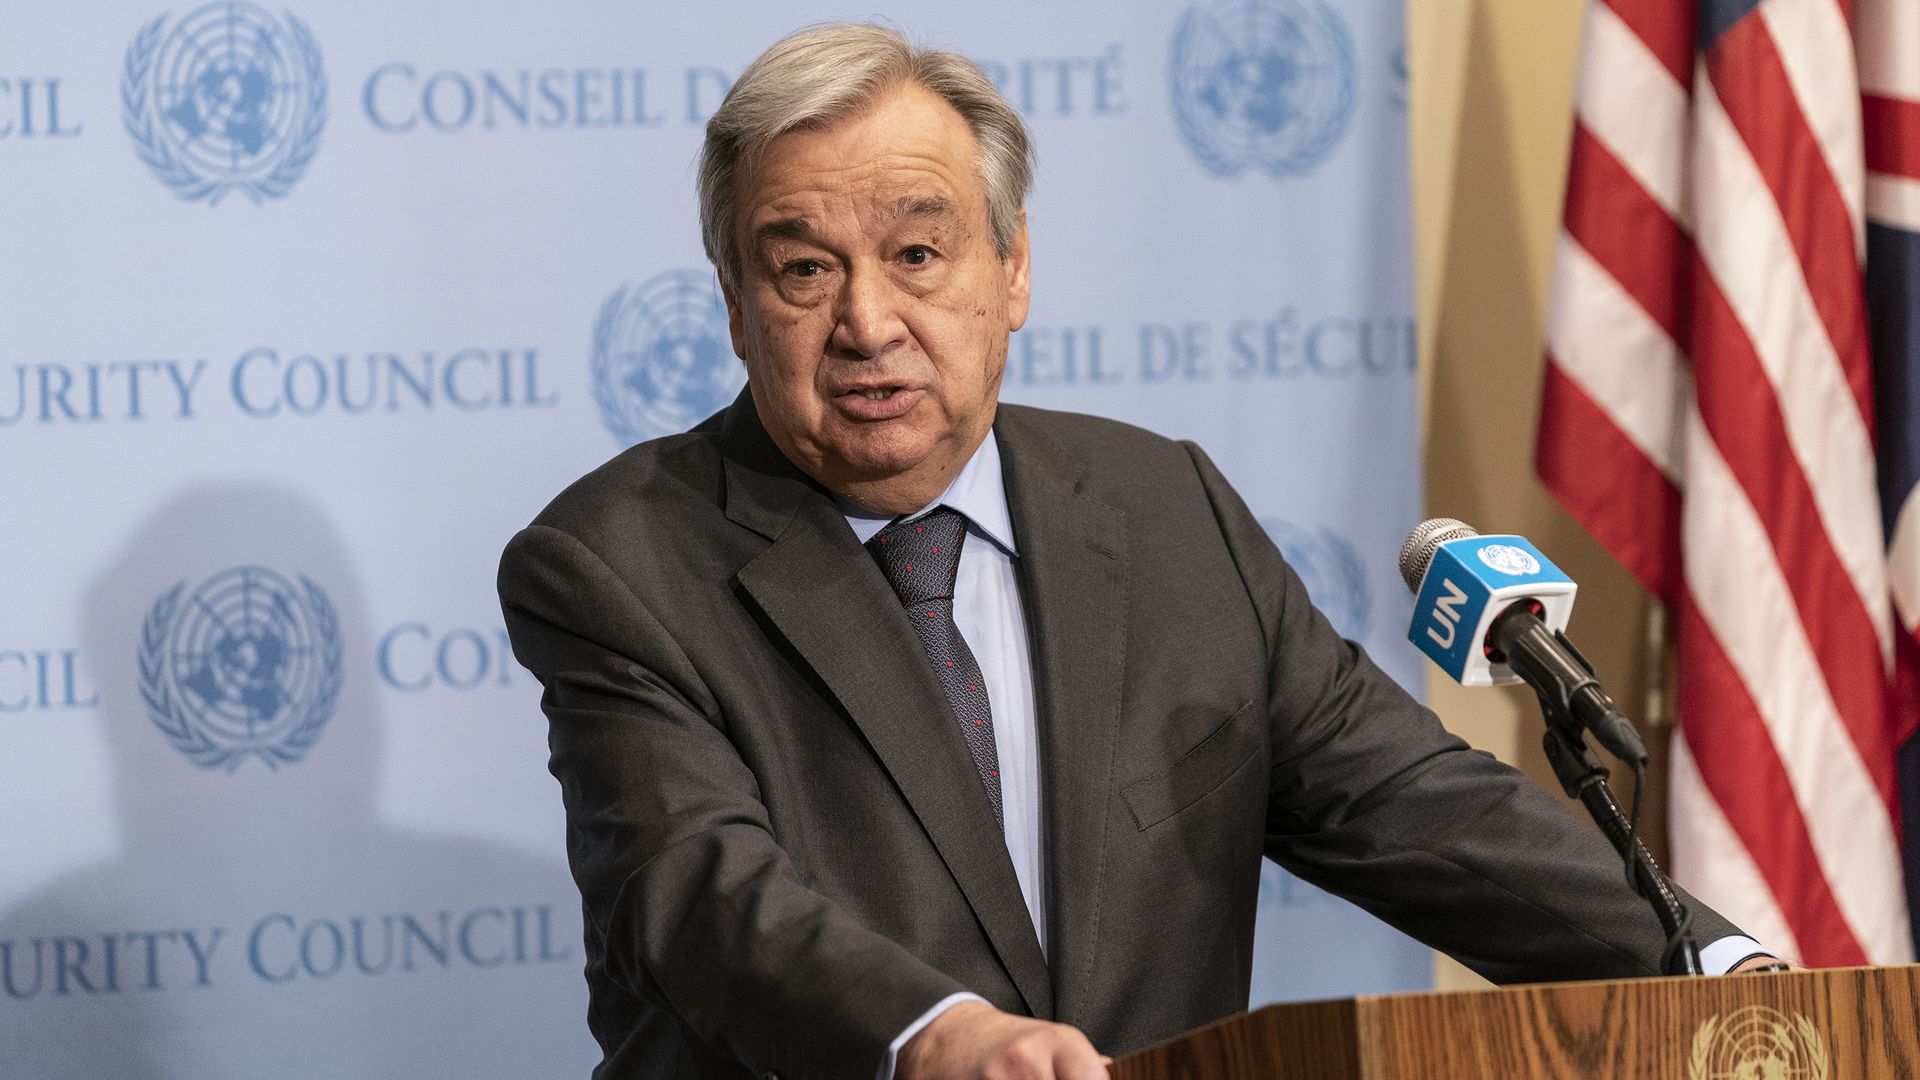 Secretary General Antonio Guterres speaking in UN headquarters in New York City on March 10.